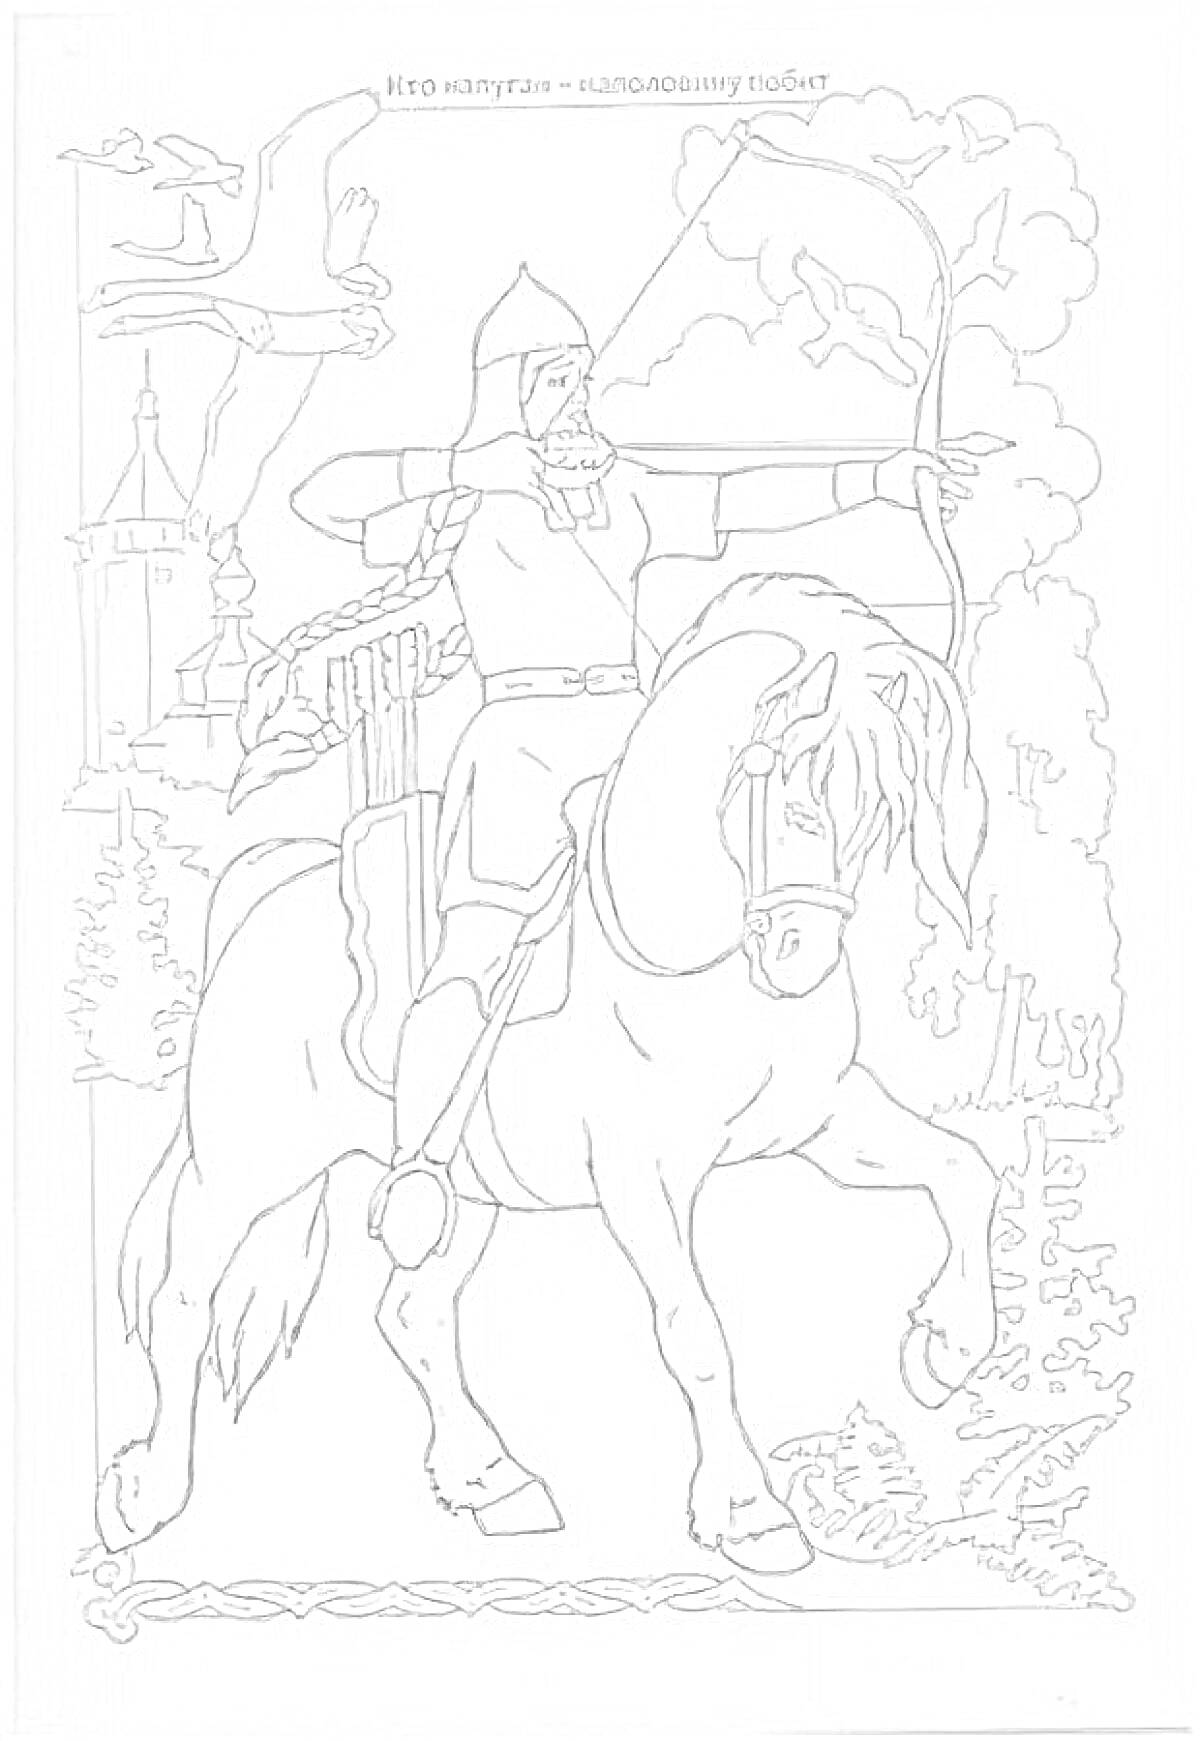 Раскраска Александр Невский стреляет из лука, изображен на коне среди природы, на заднем плане башни и птицы